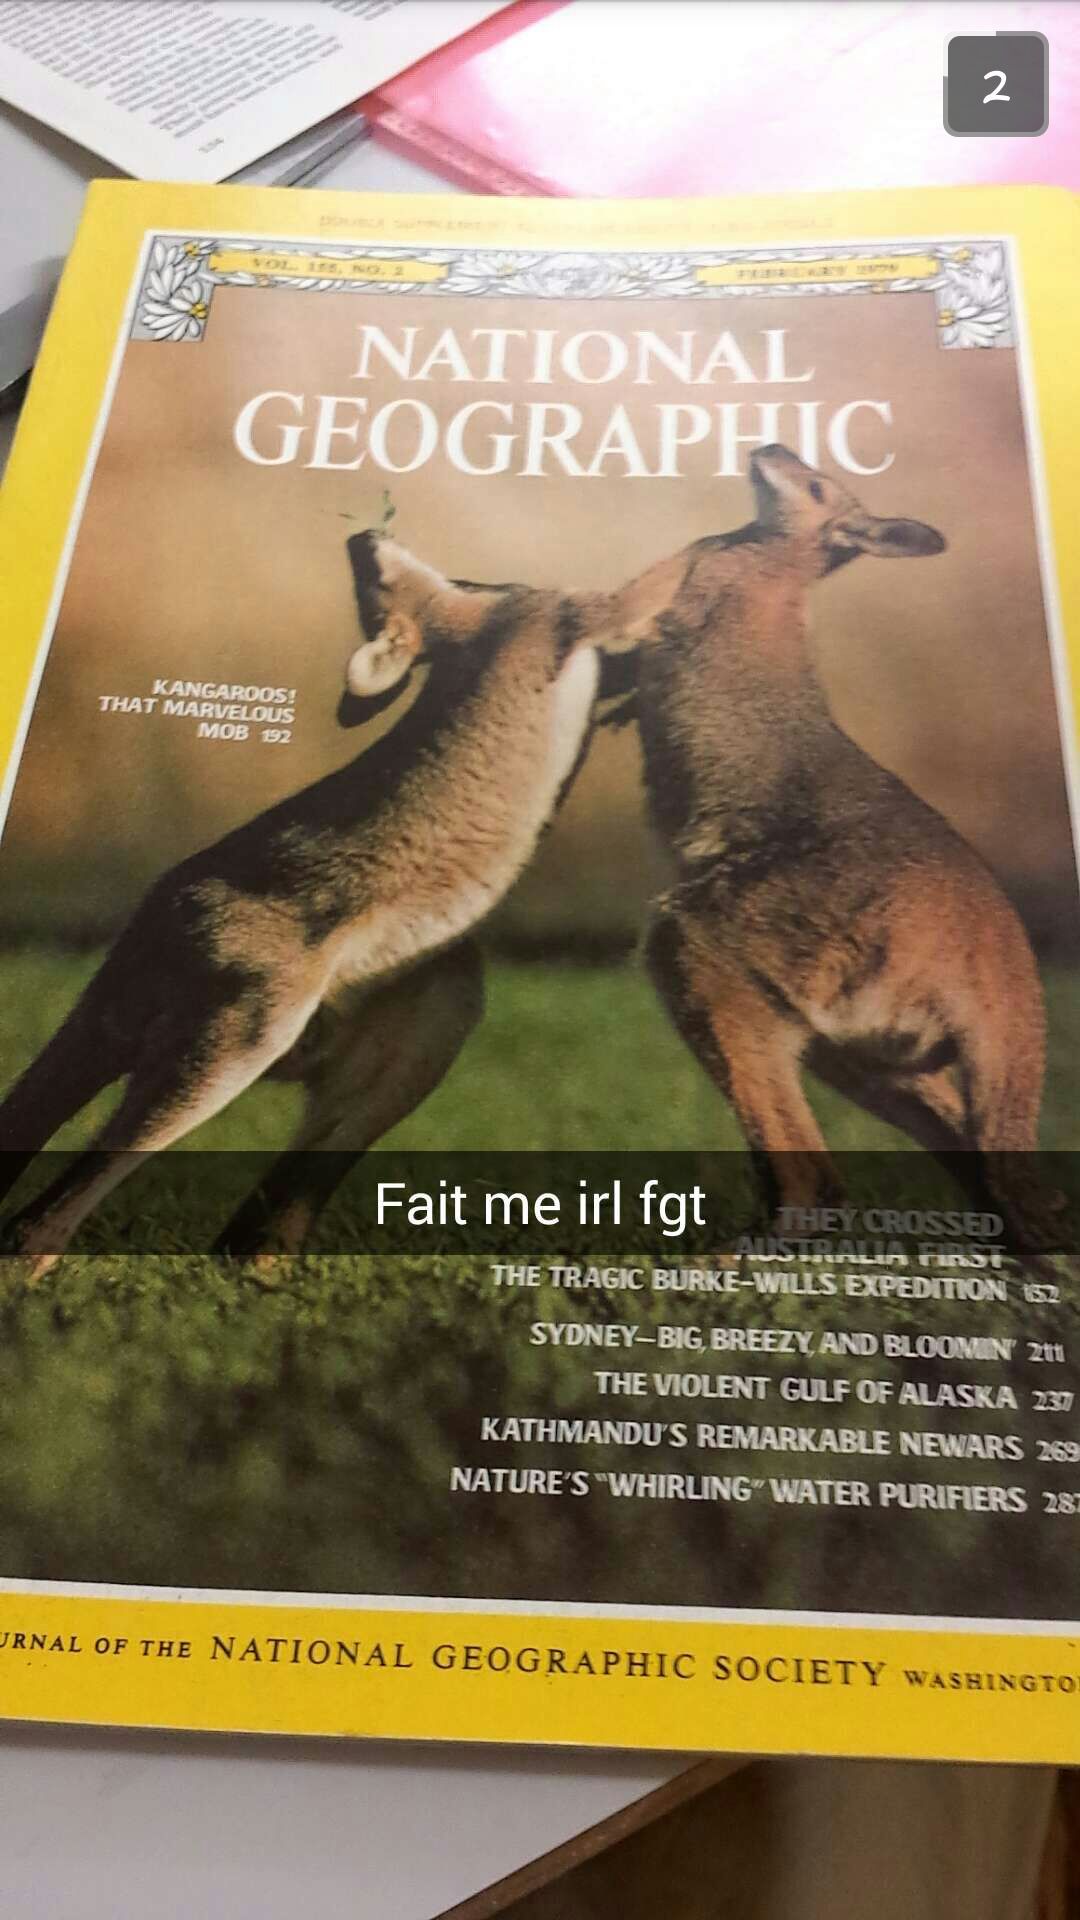 Title likes kangaroos - meme